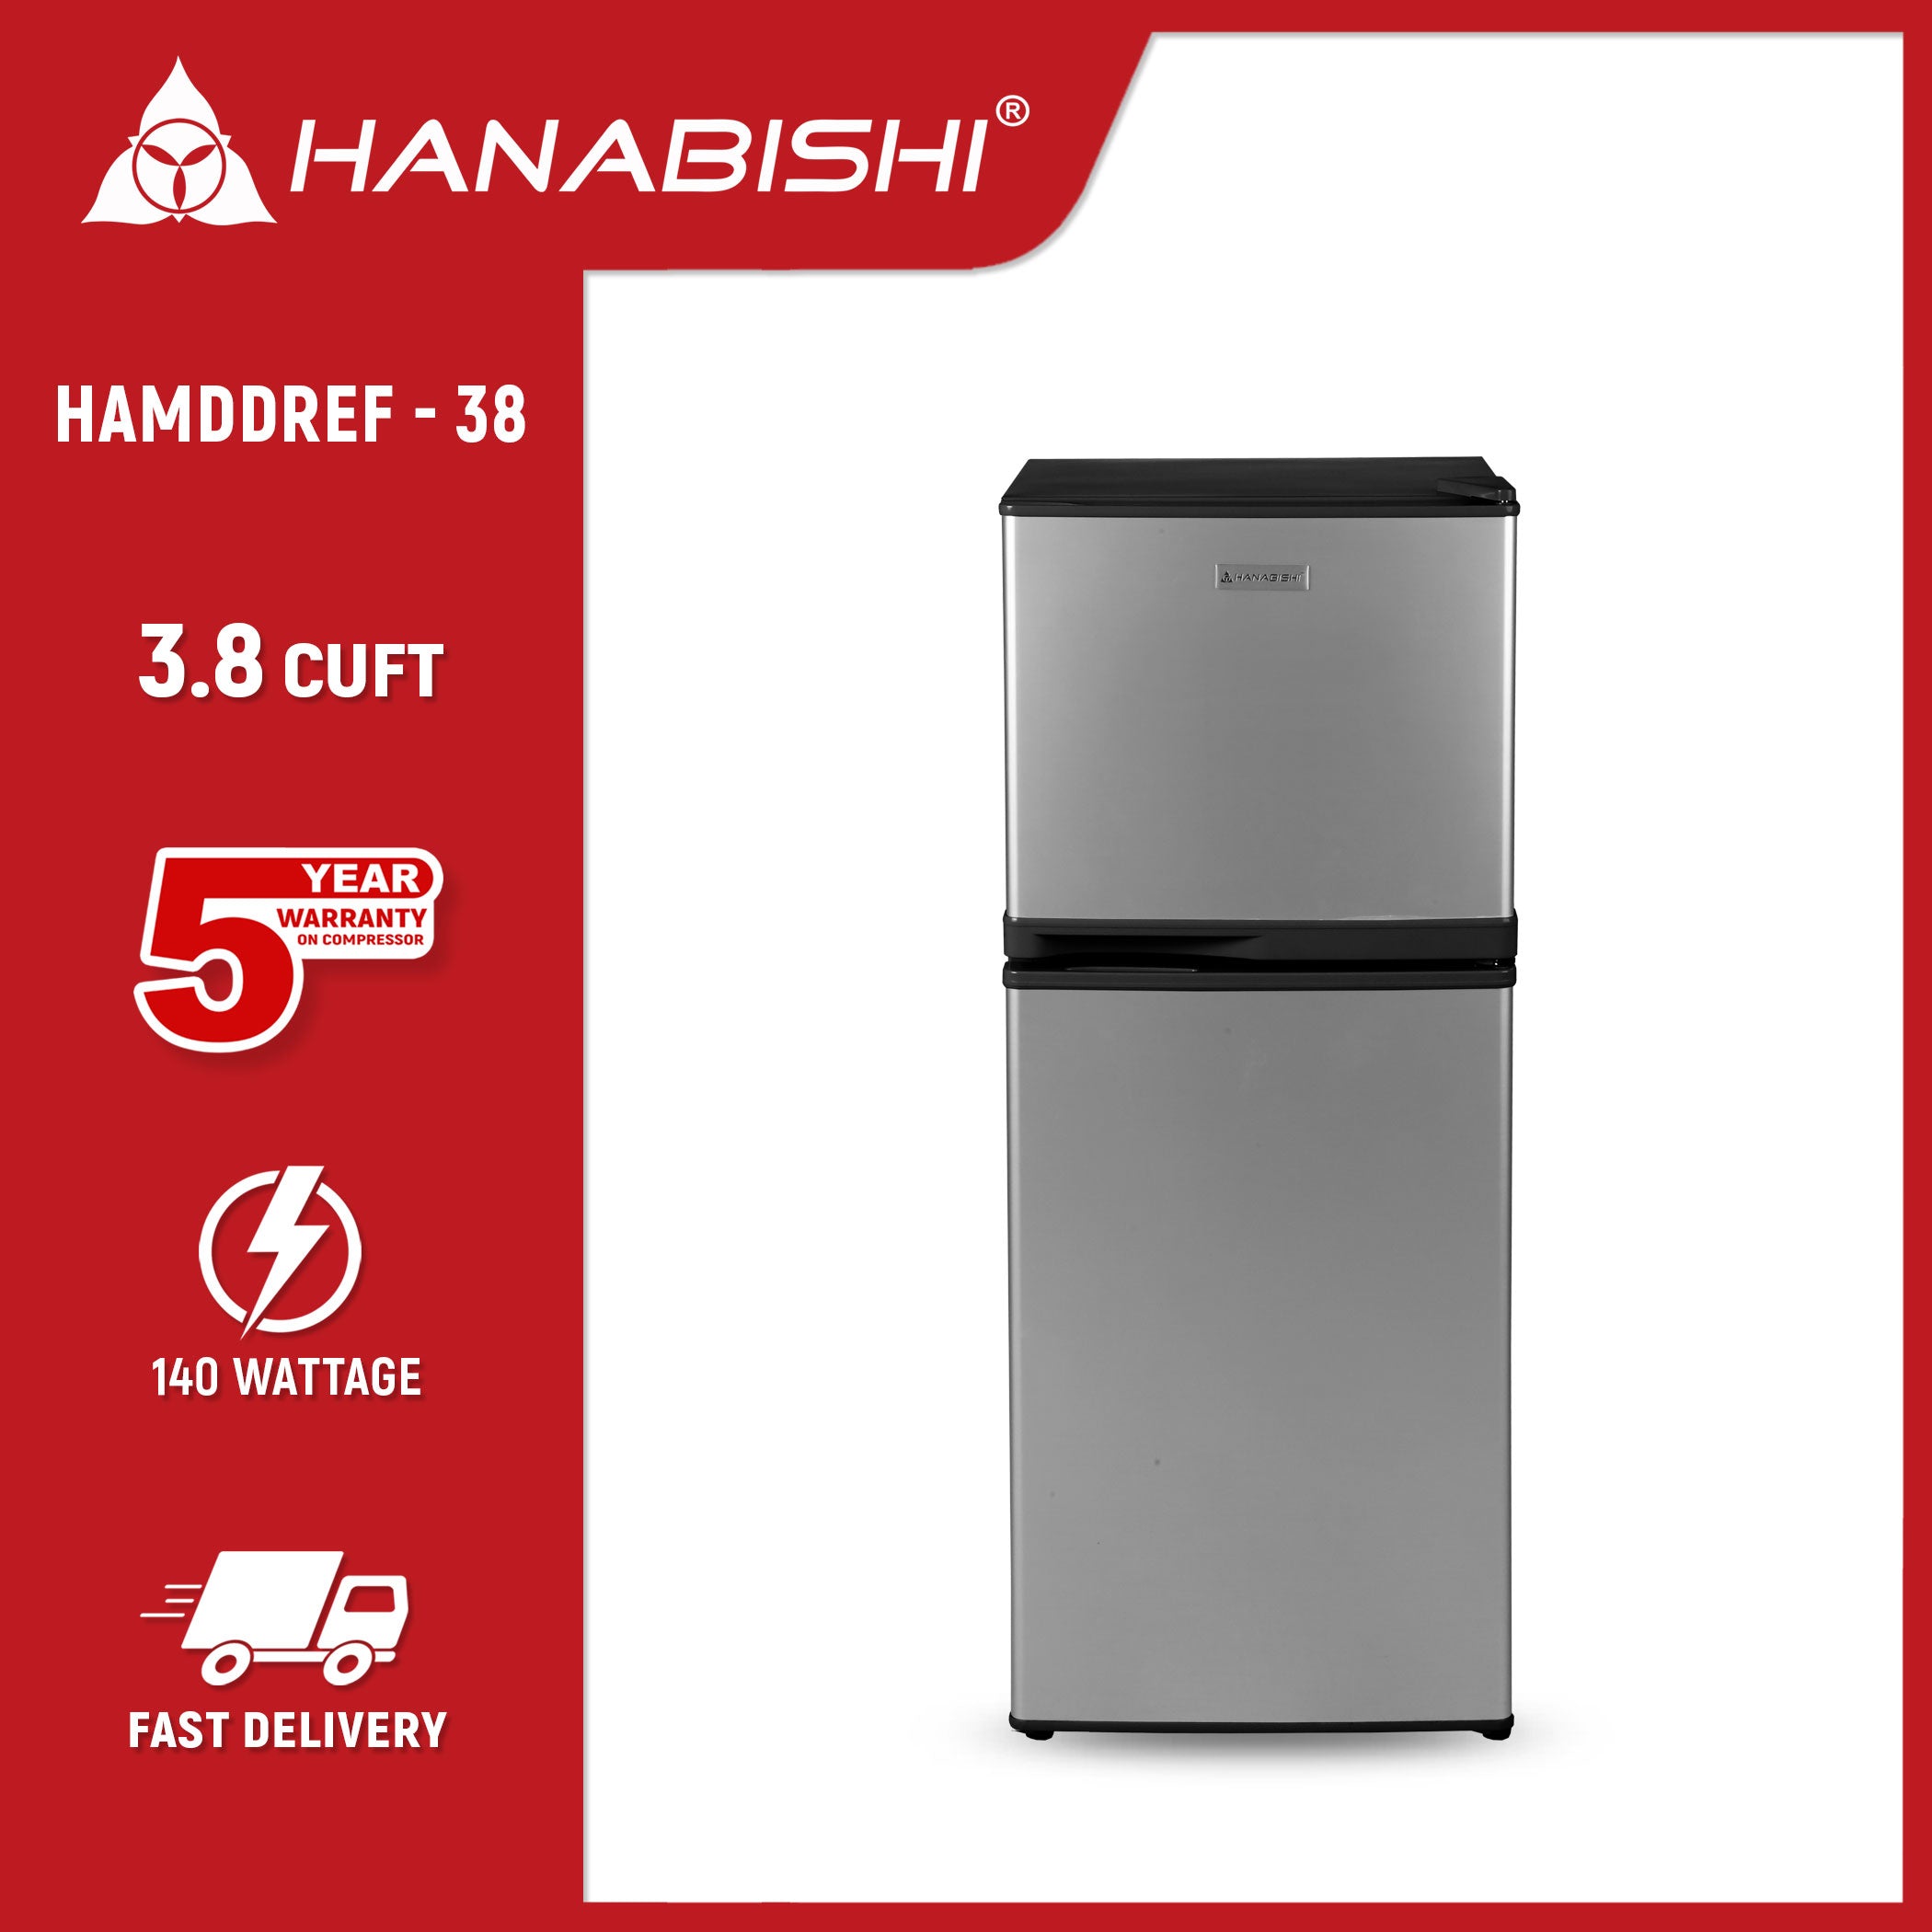 HANABISHI HAMDDREF-38 3.8 cu.ft. Double Door Refrigerator Hanabishi